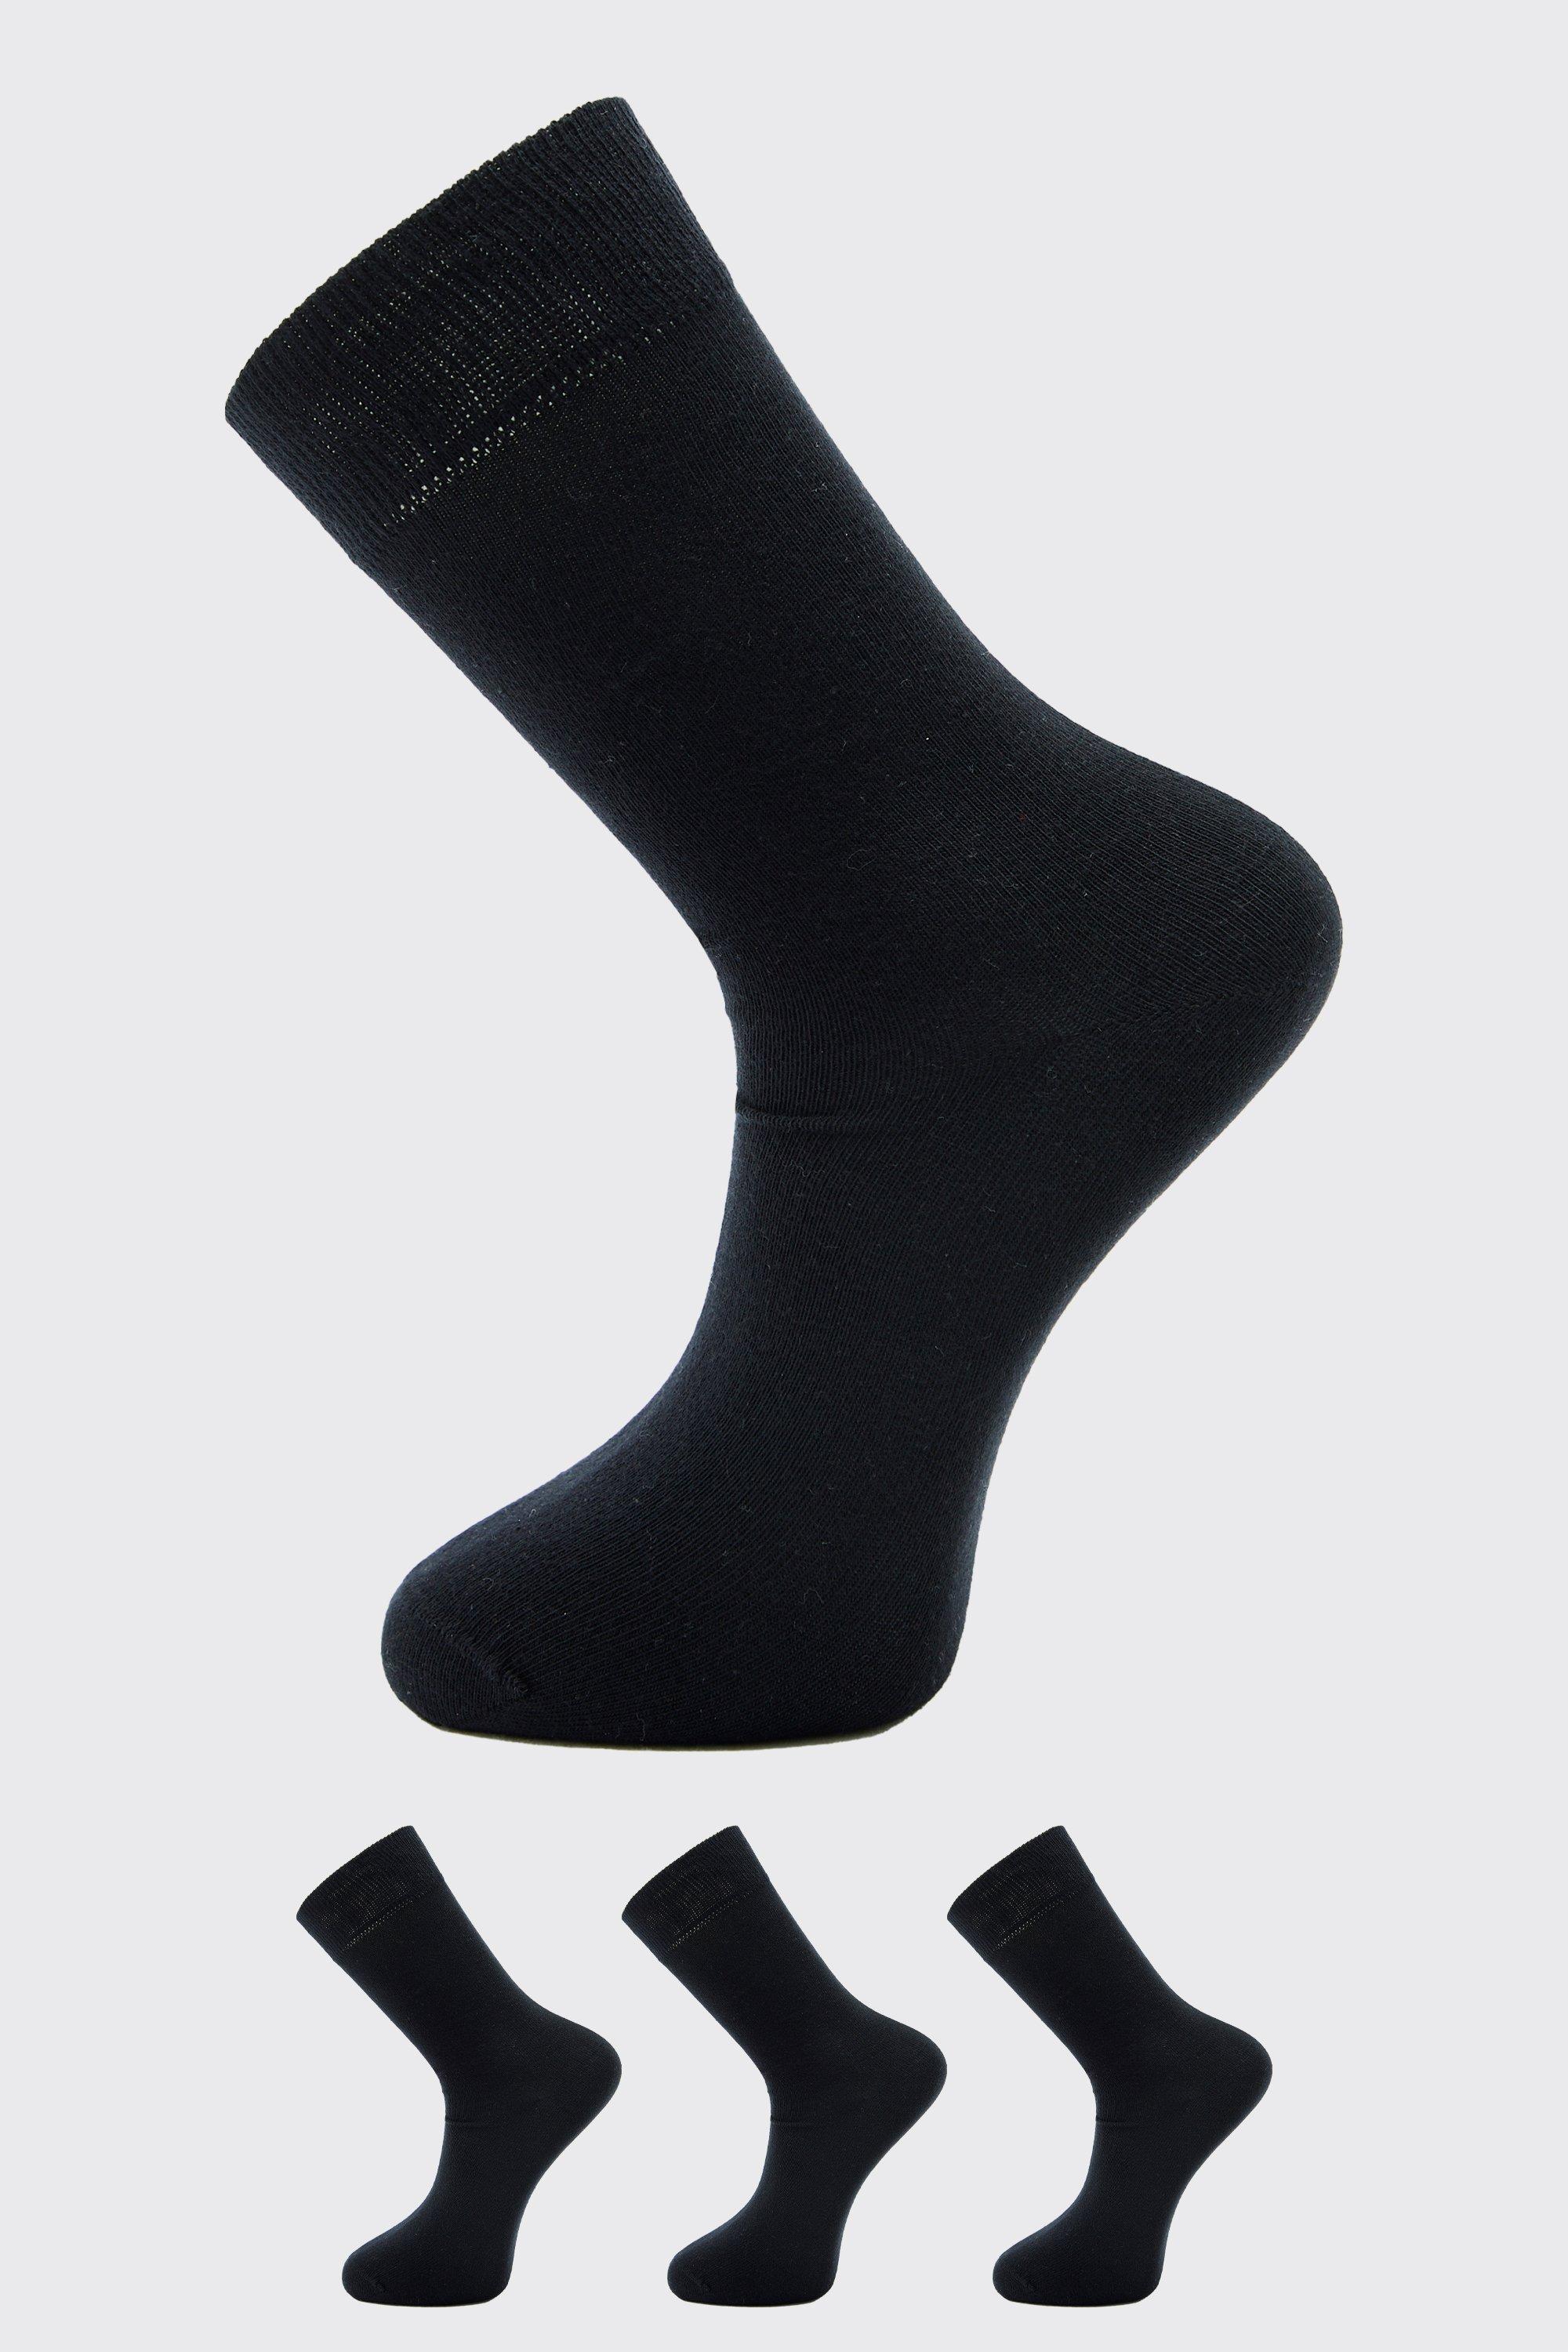 Snugpak Merino Wool Unisex Underwear Socks Black All Sizes 